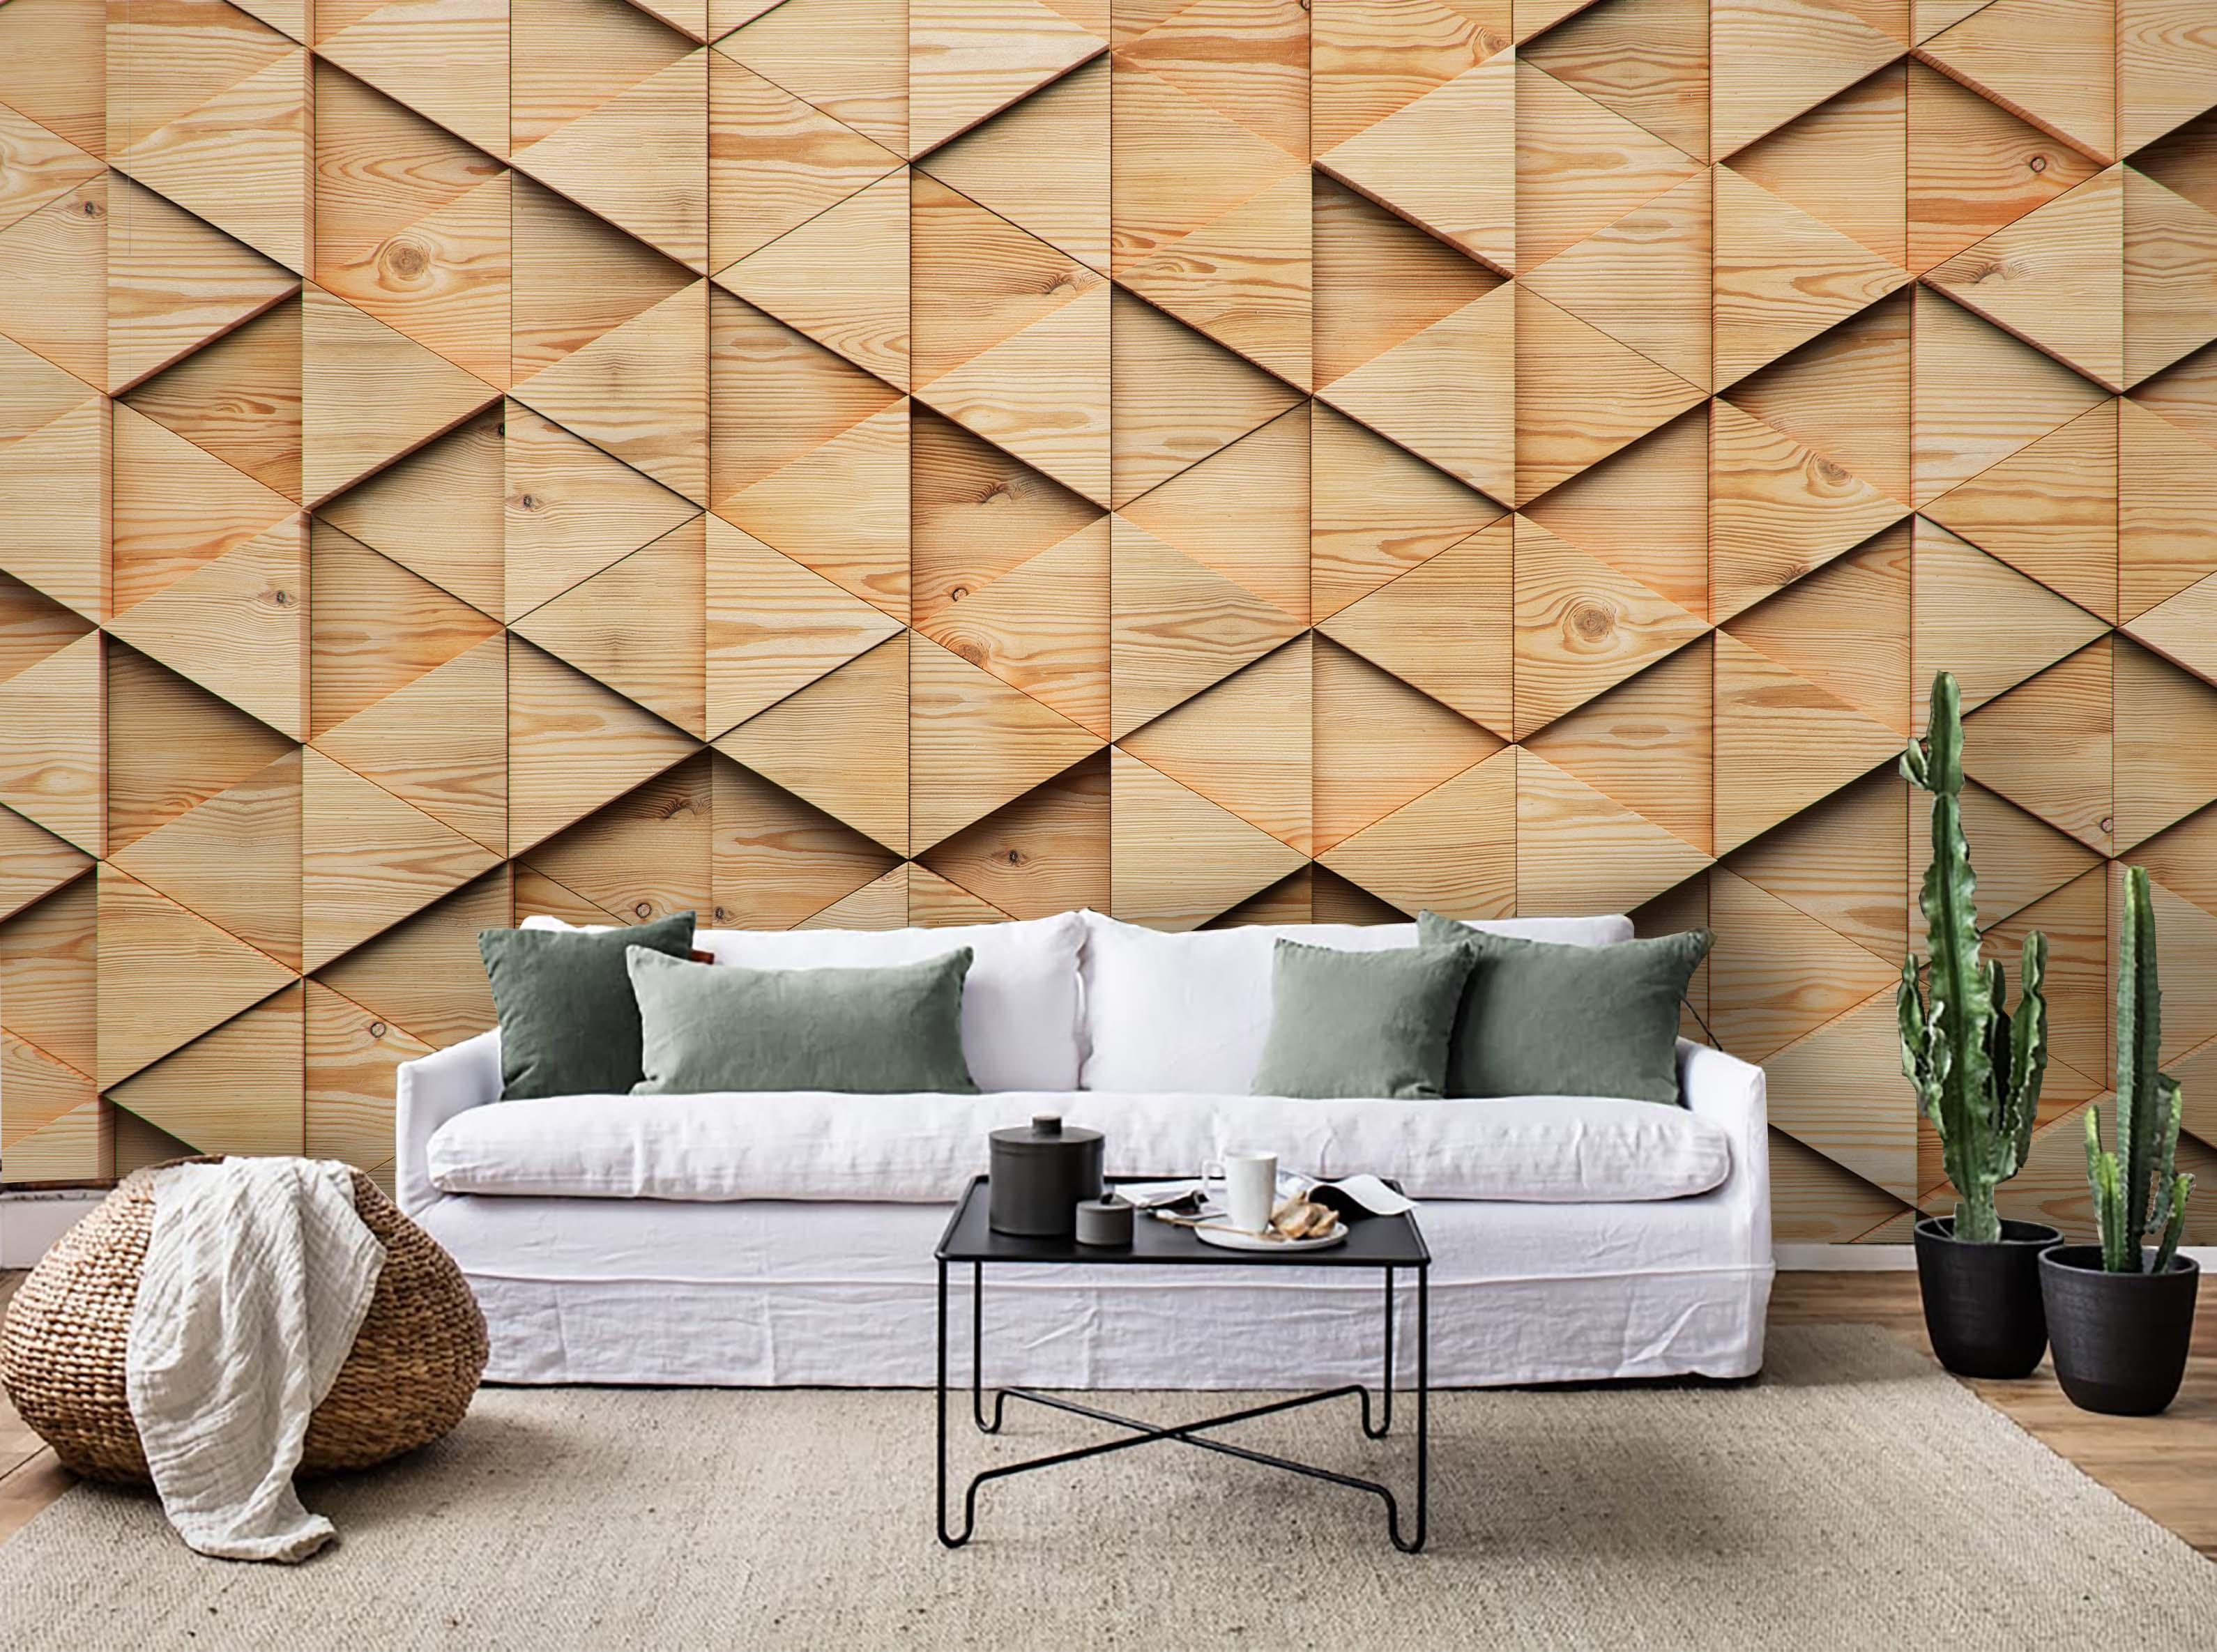 3D Wood Triangle Combination Wall Mural Wallpaper 39- Jess Art Decoration